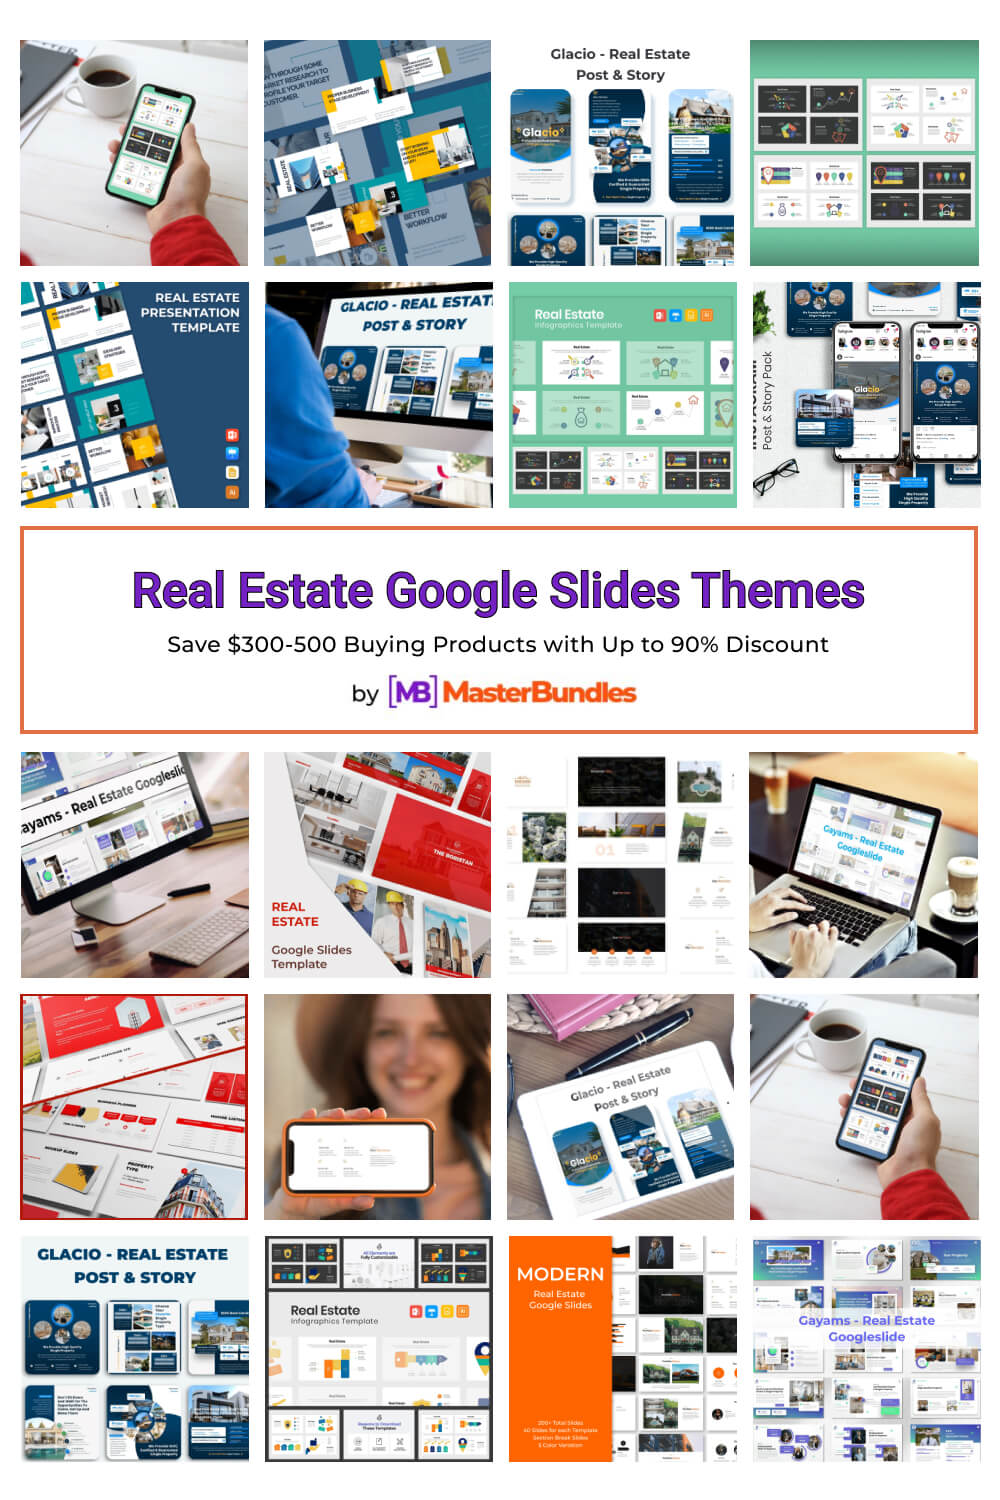 real estate google slides themes pinterest image.